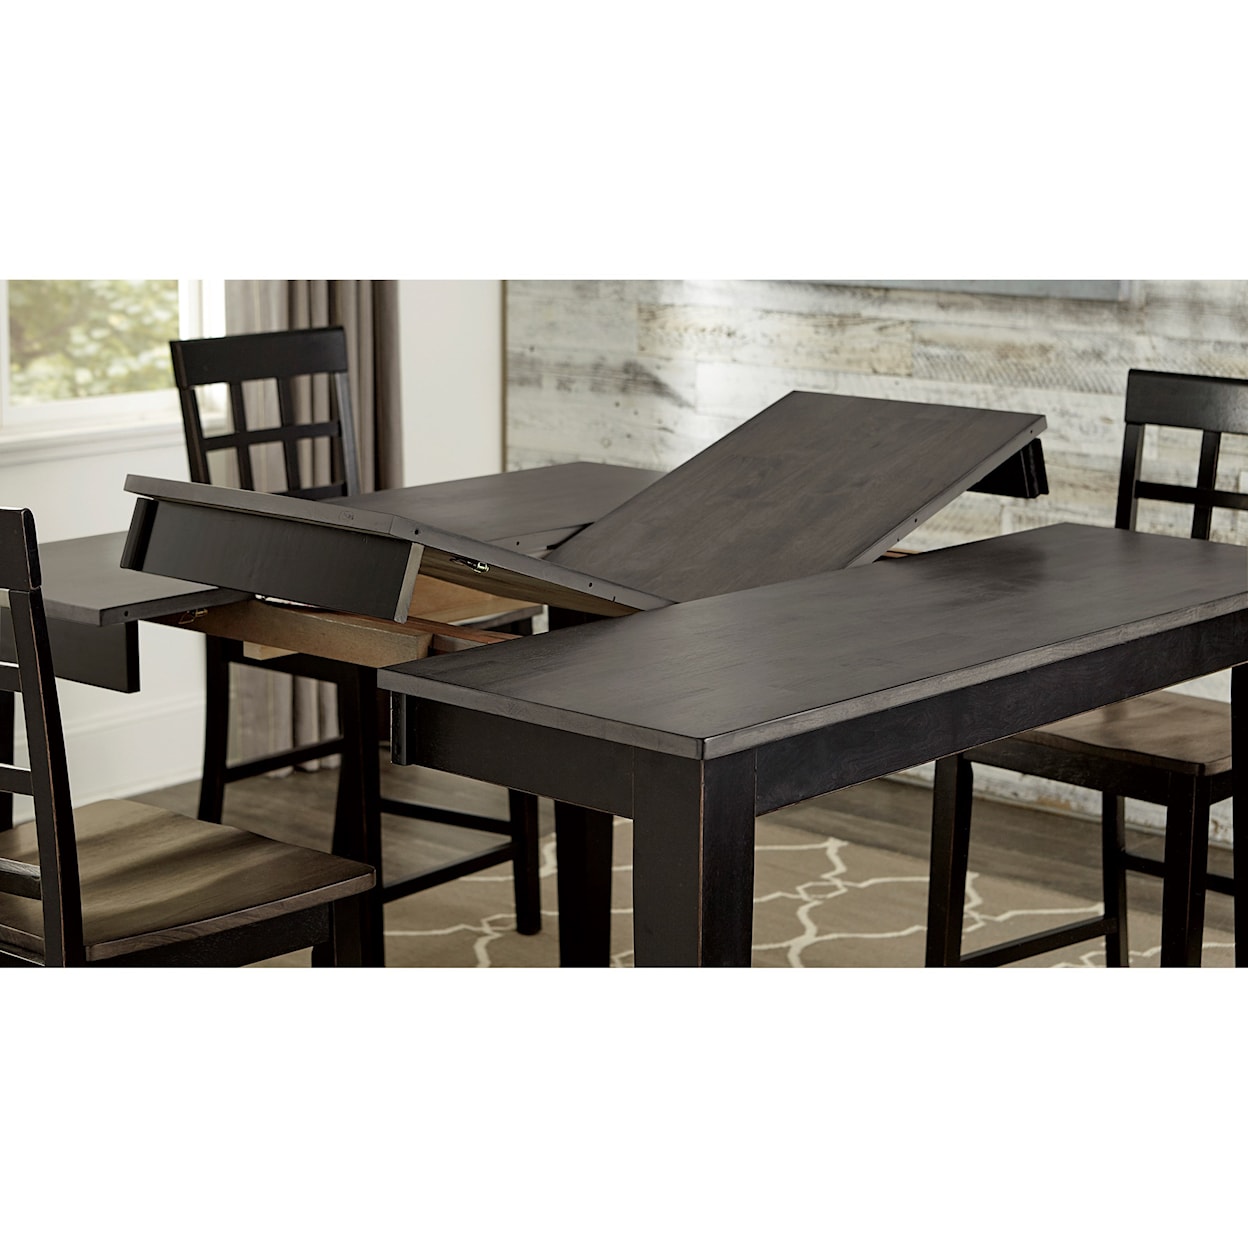 Progressive Furniture Salem Counter Table